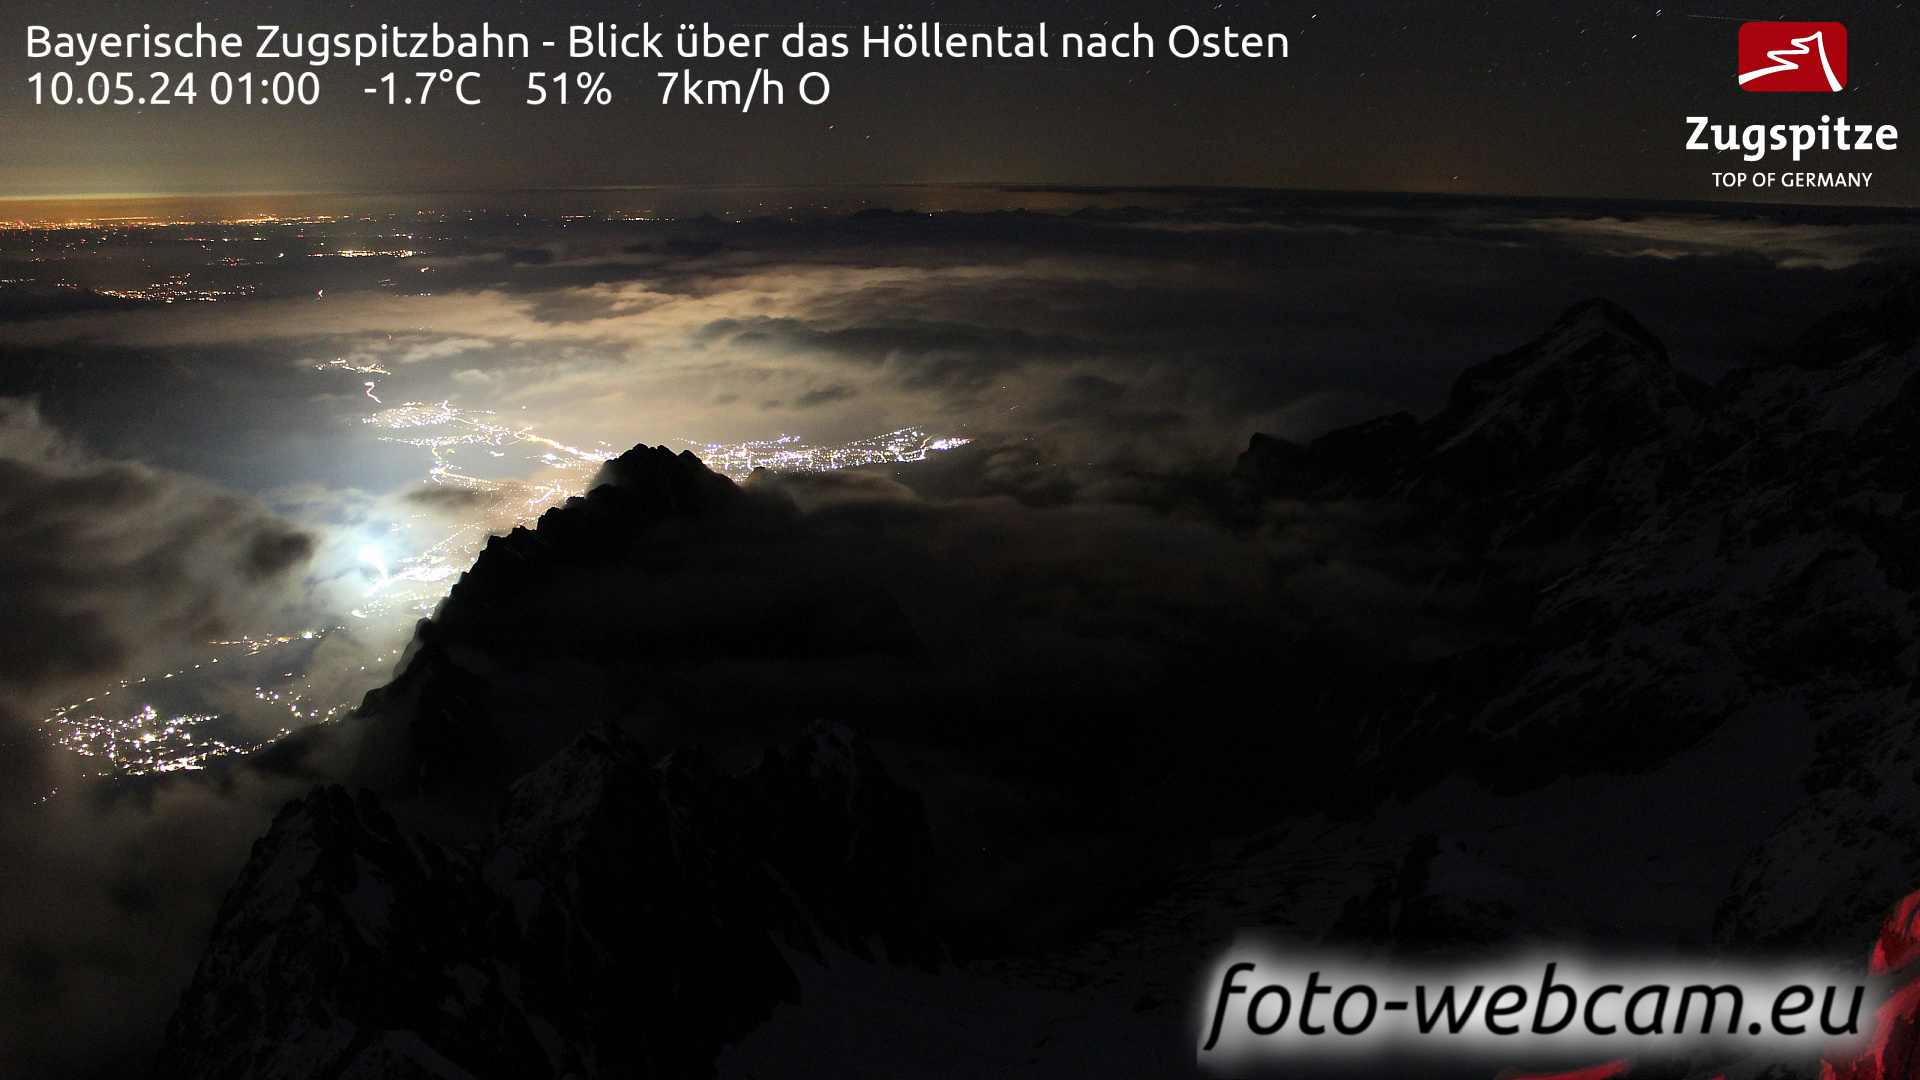 Zugspitze Ven. 01:05